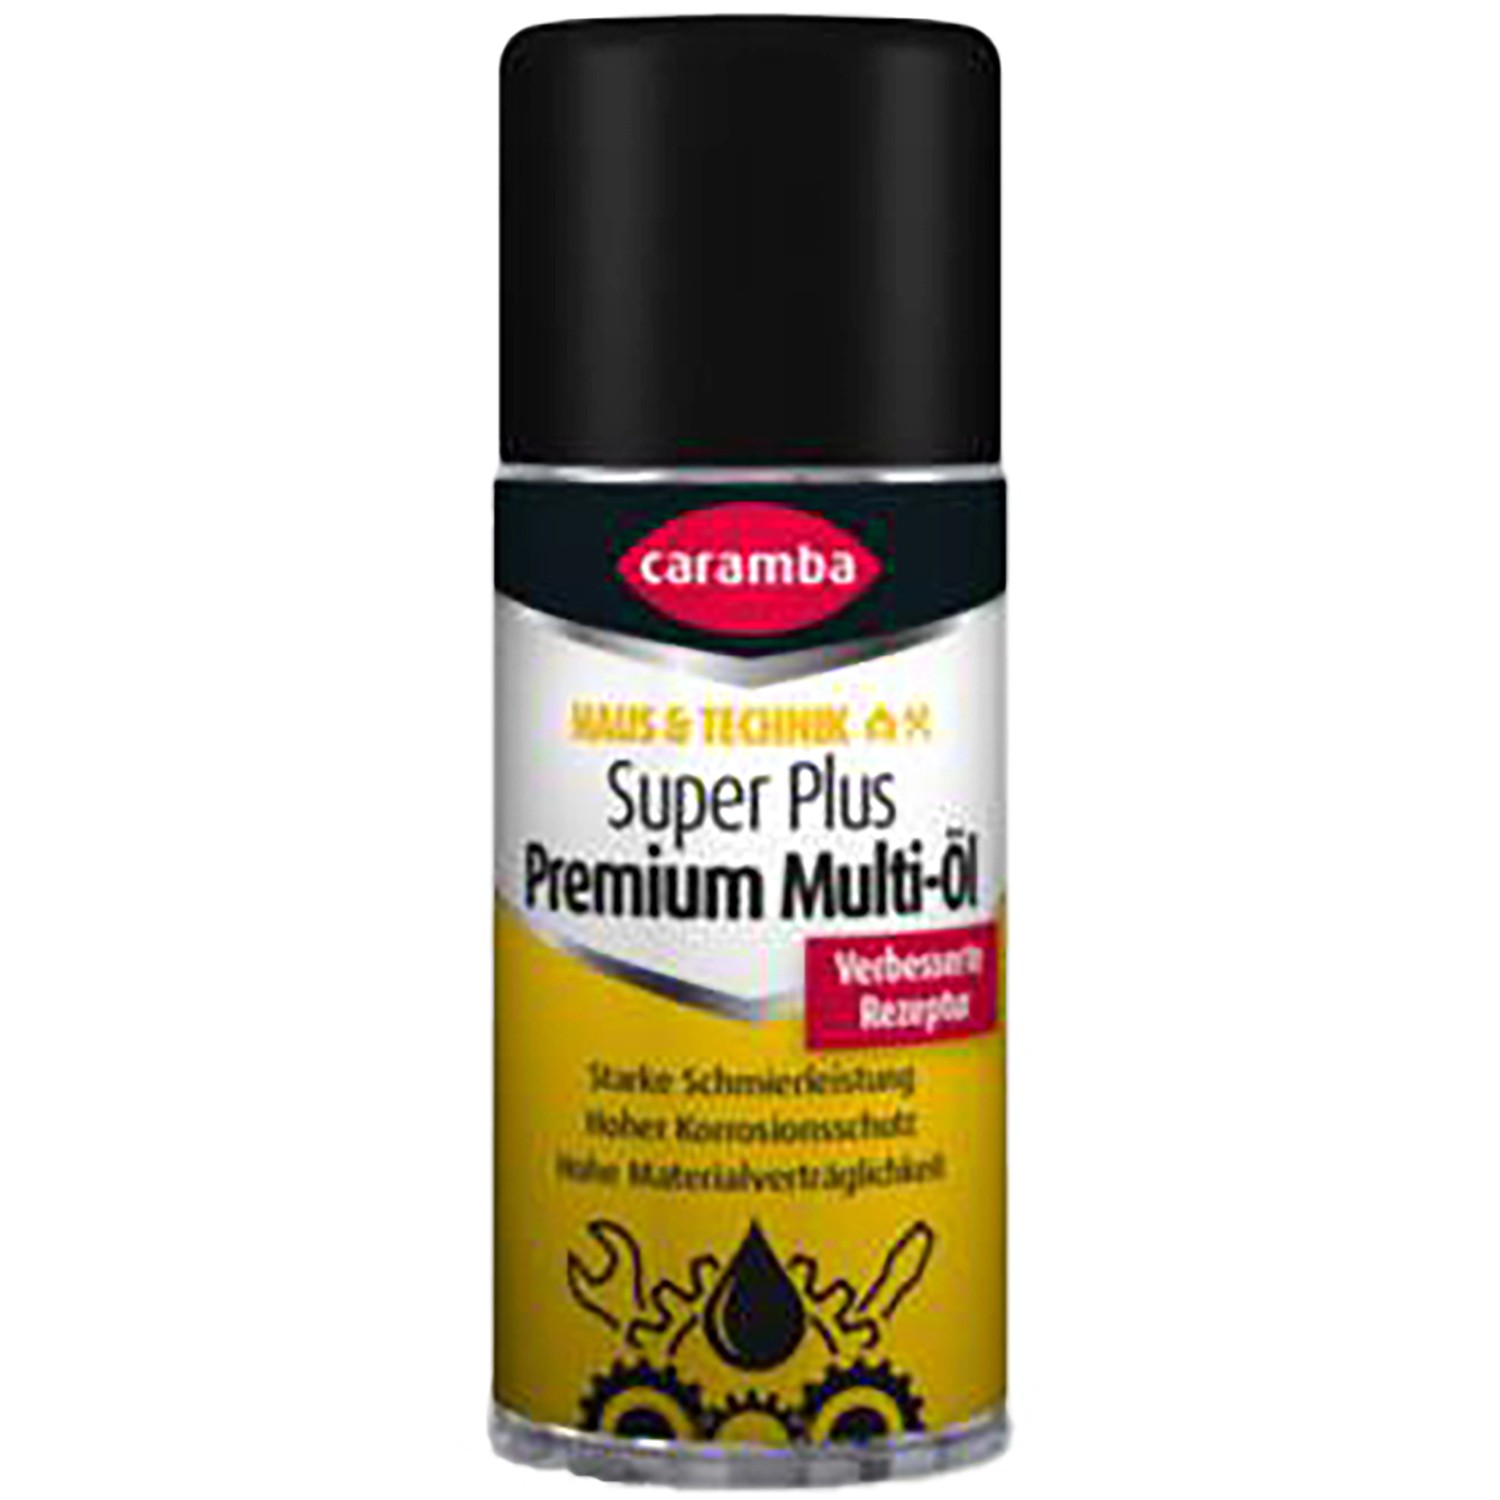 Caramba Super Plus Multi-Spray 100 ml kaufen bei OBI